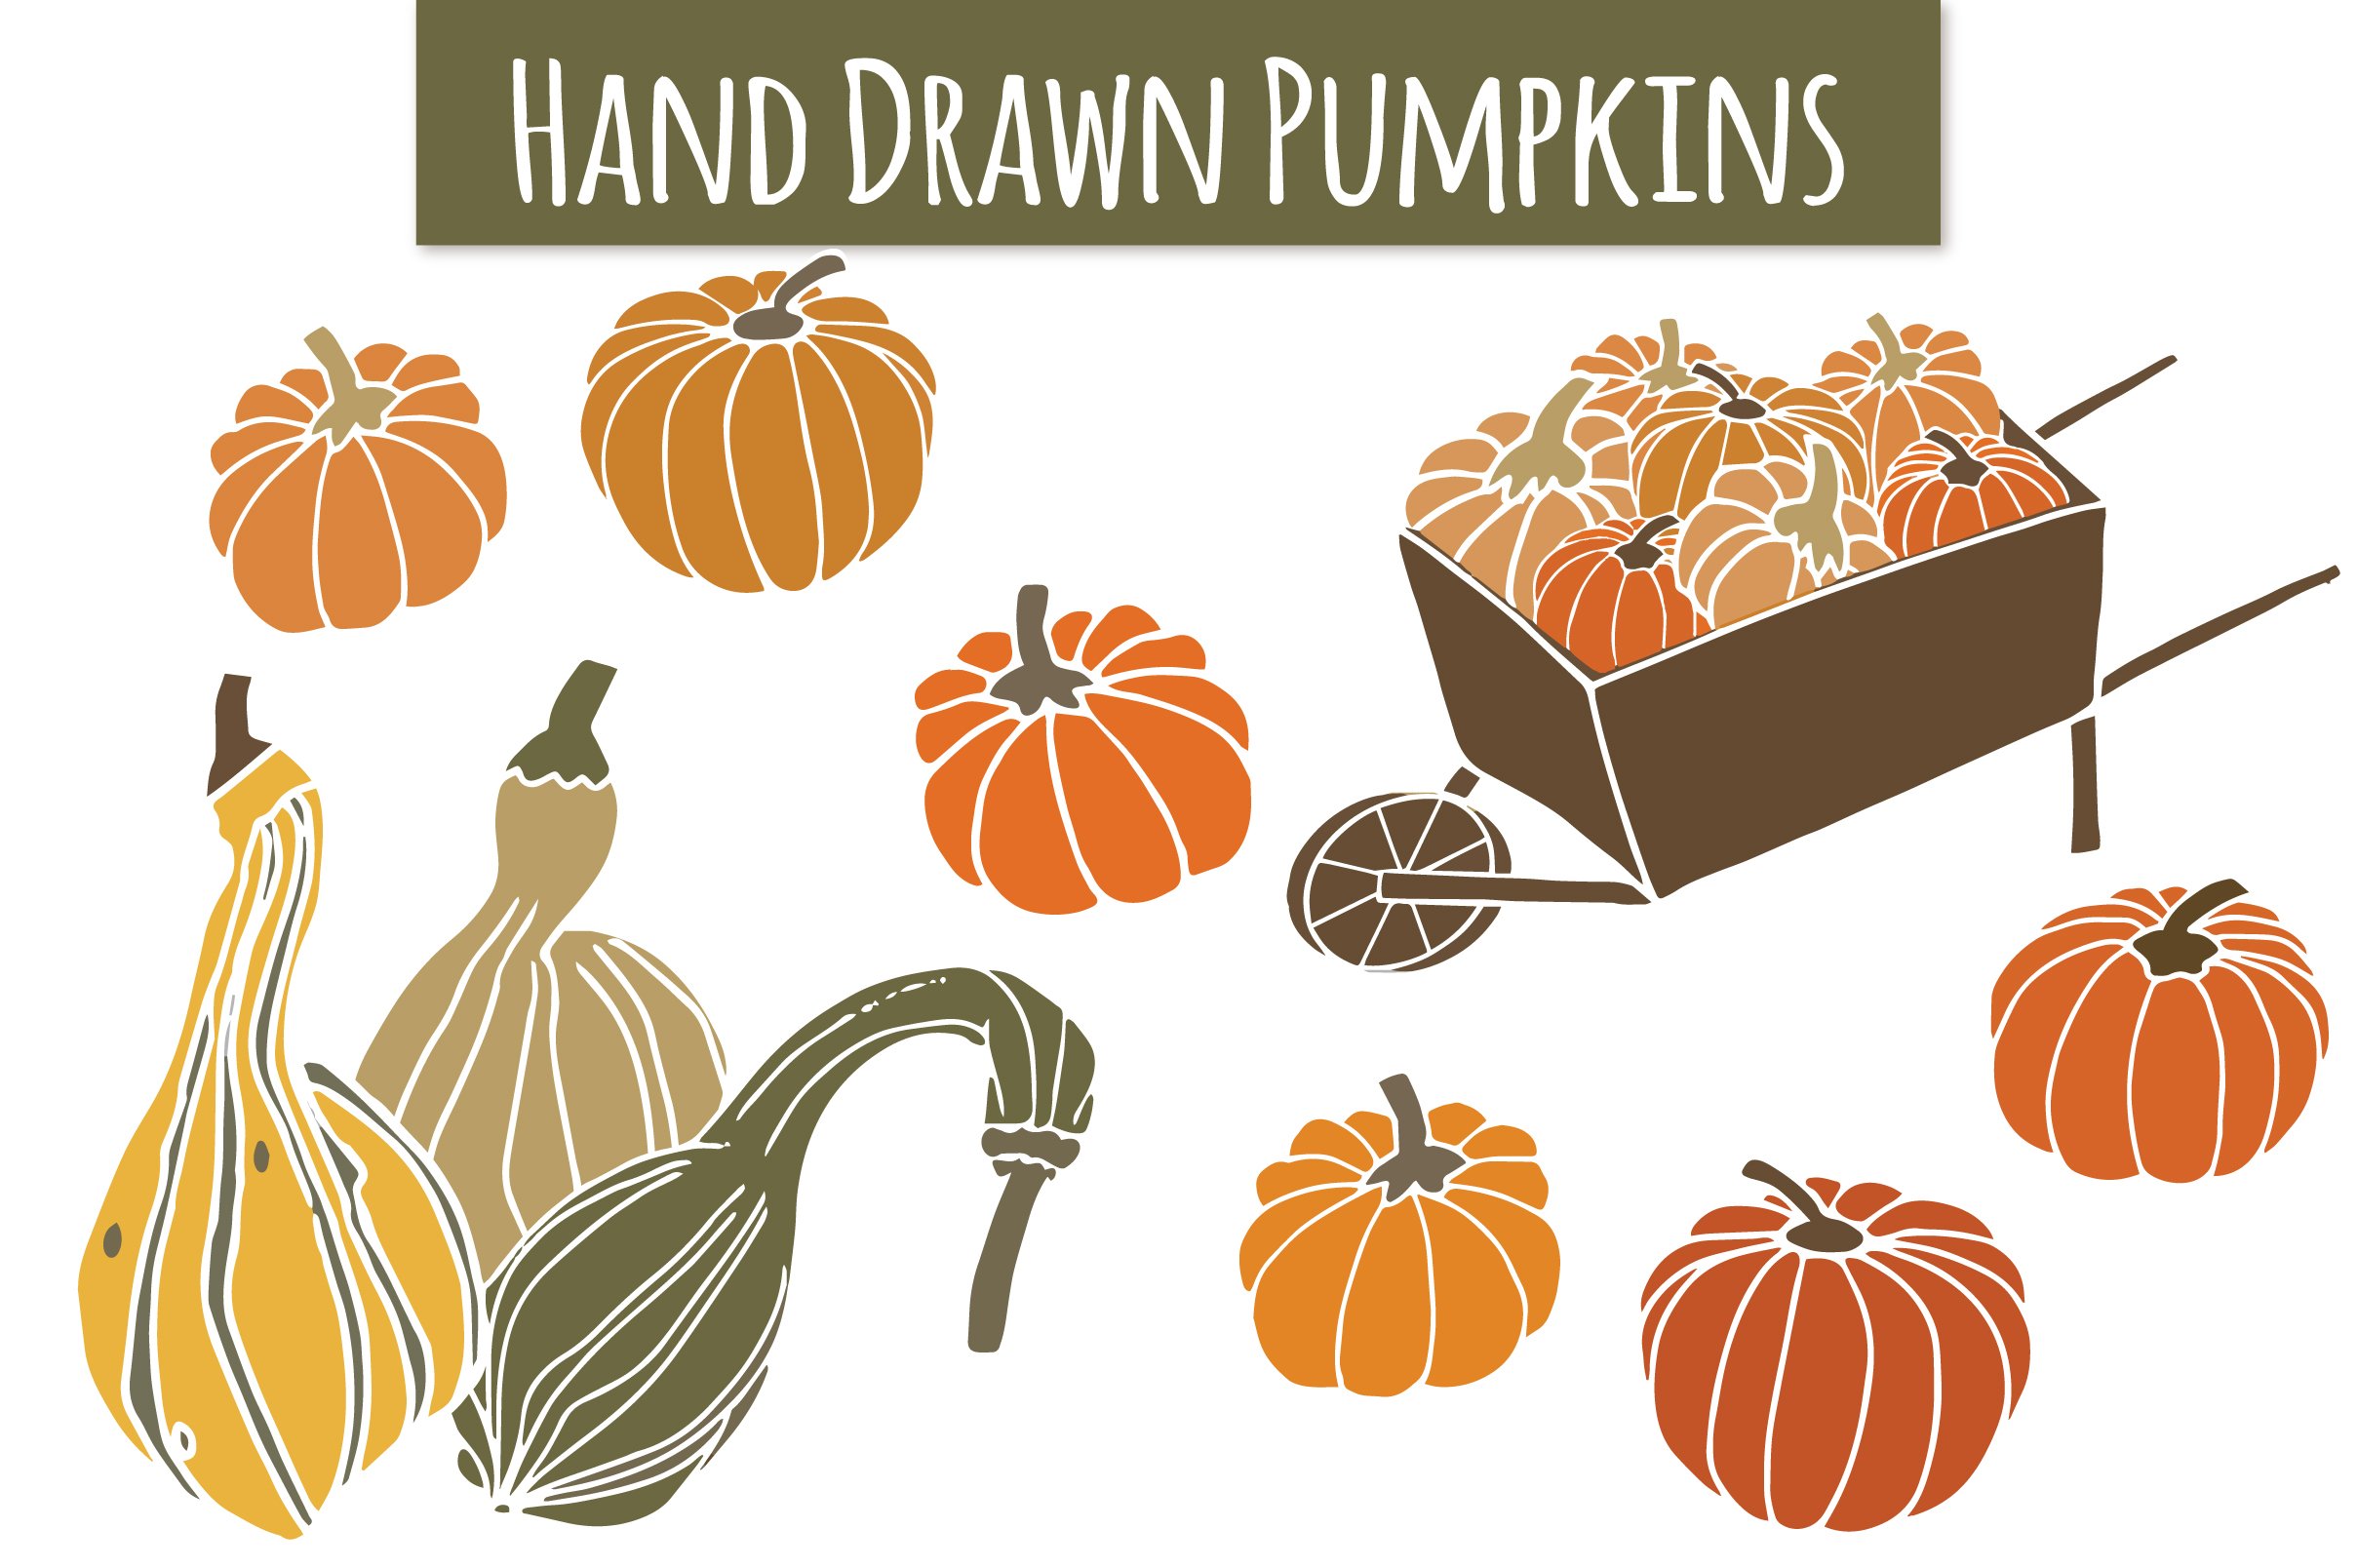 Hand drawn warm pumpkins.